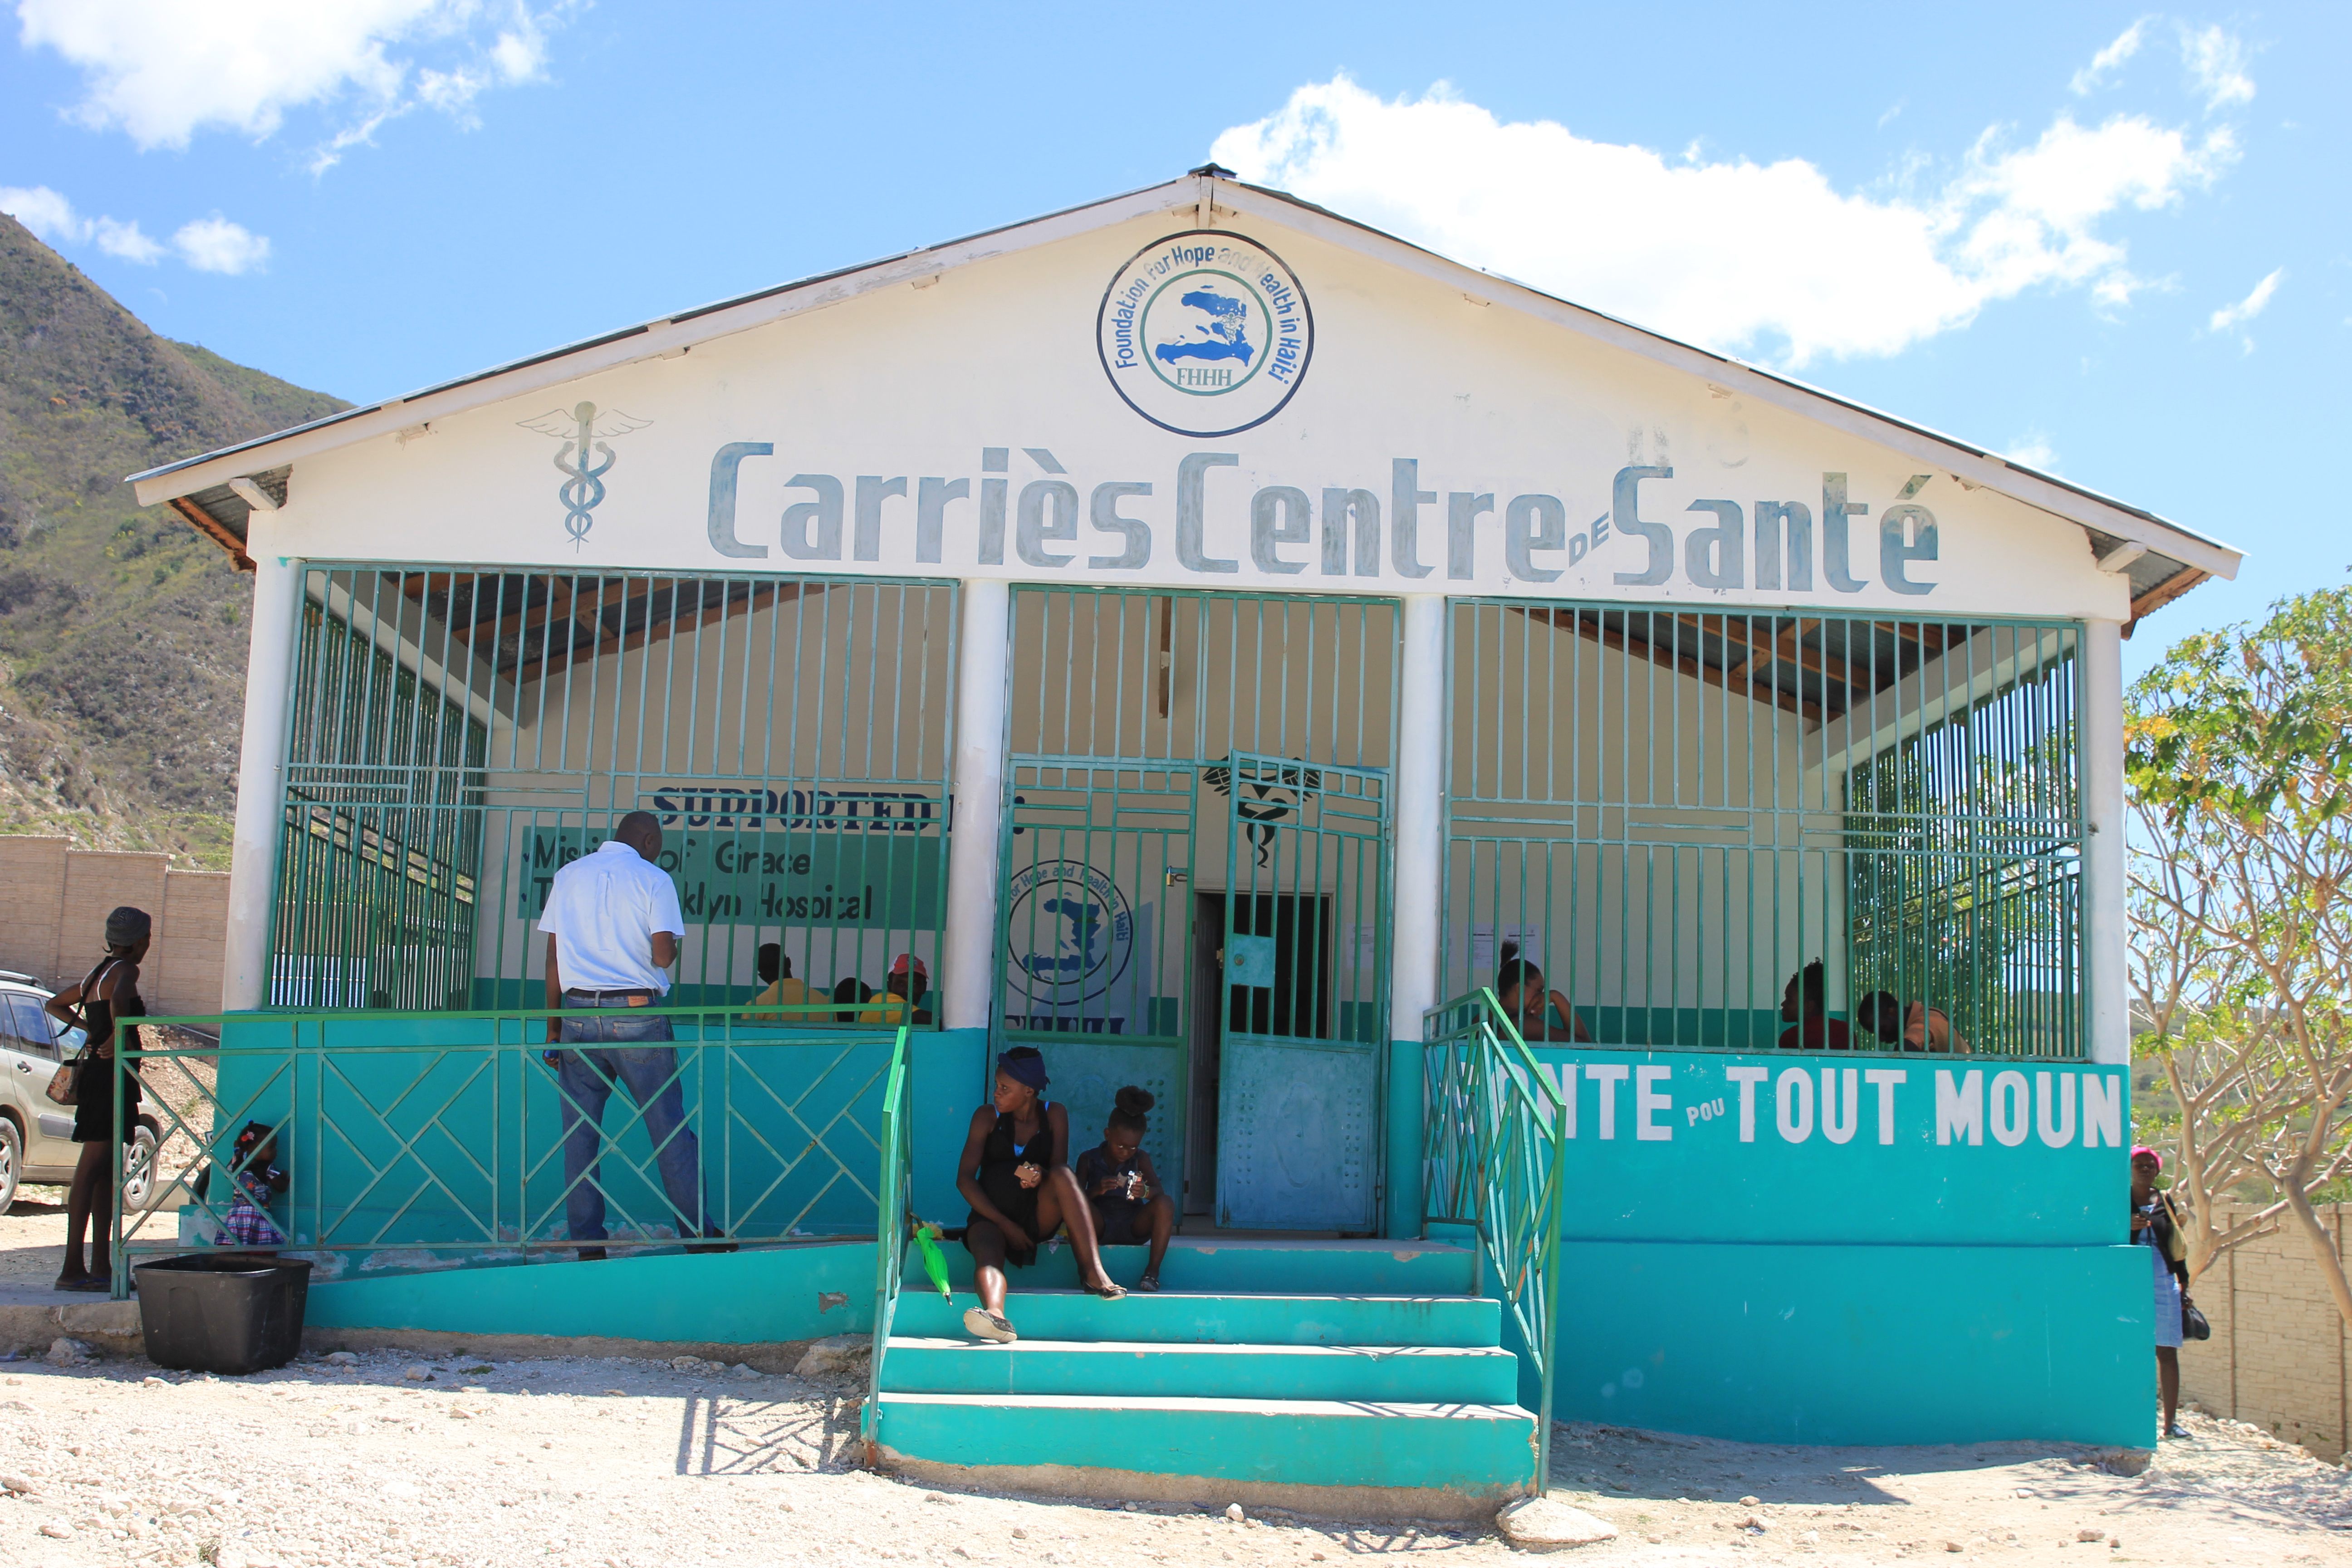 carries clinic in carries haiti